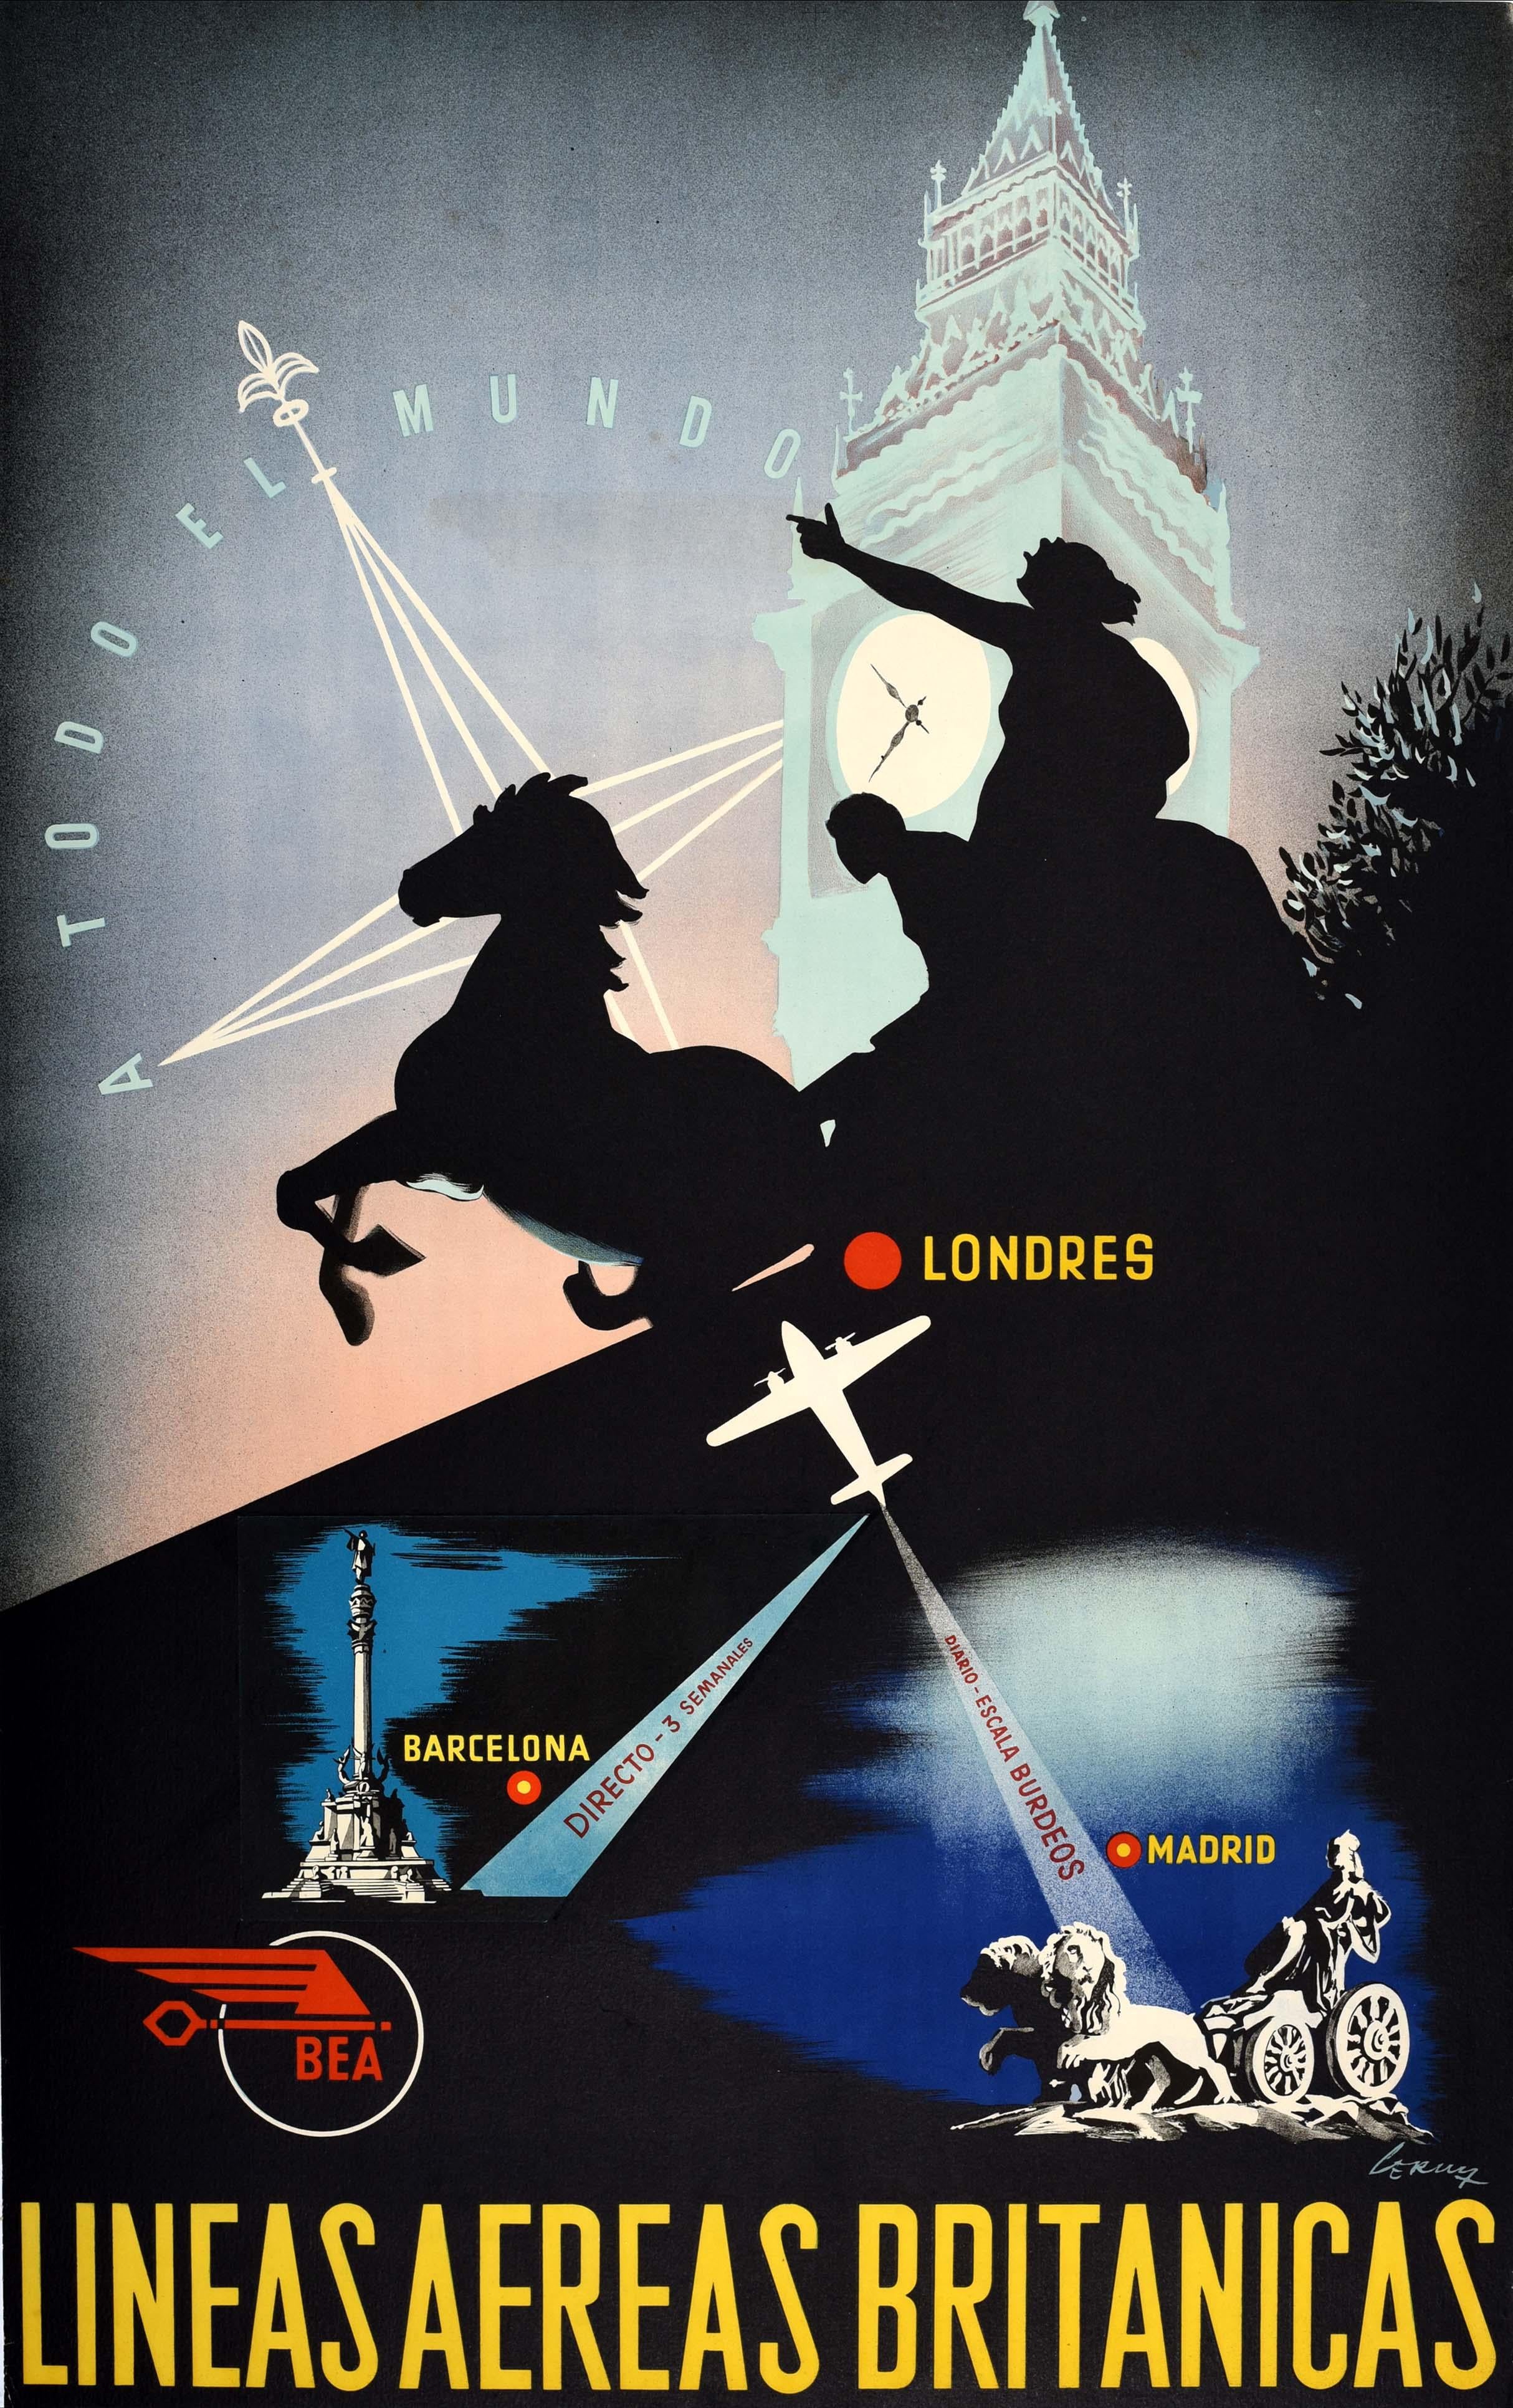 Unknown Print - Original Vintage Travel Advertising Poster BEA Lineas Aereas Britanicas London